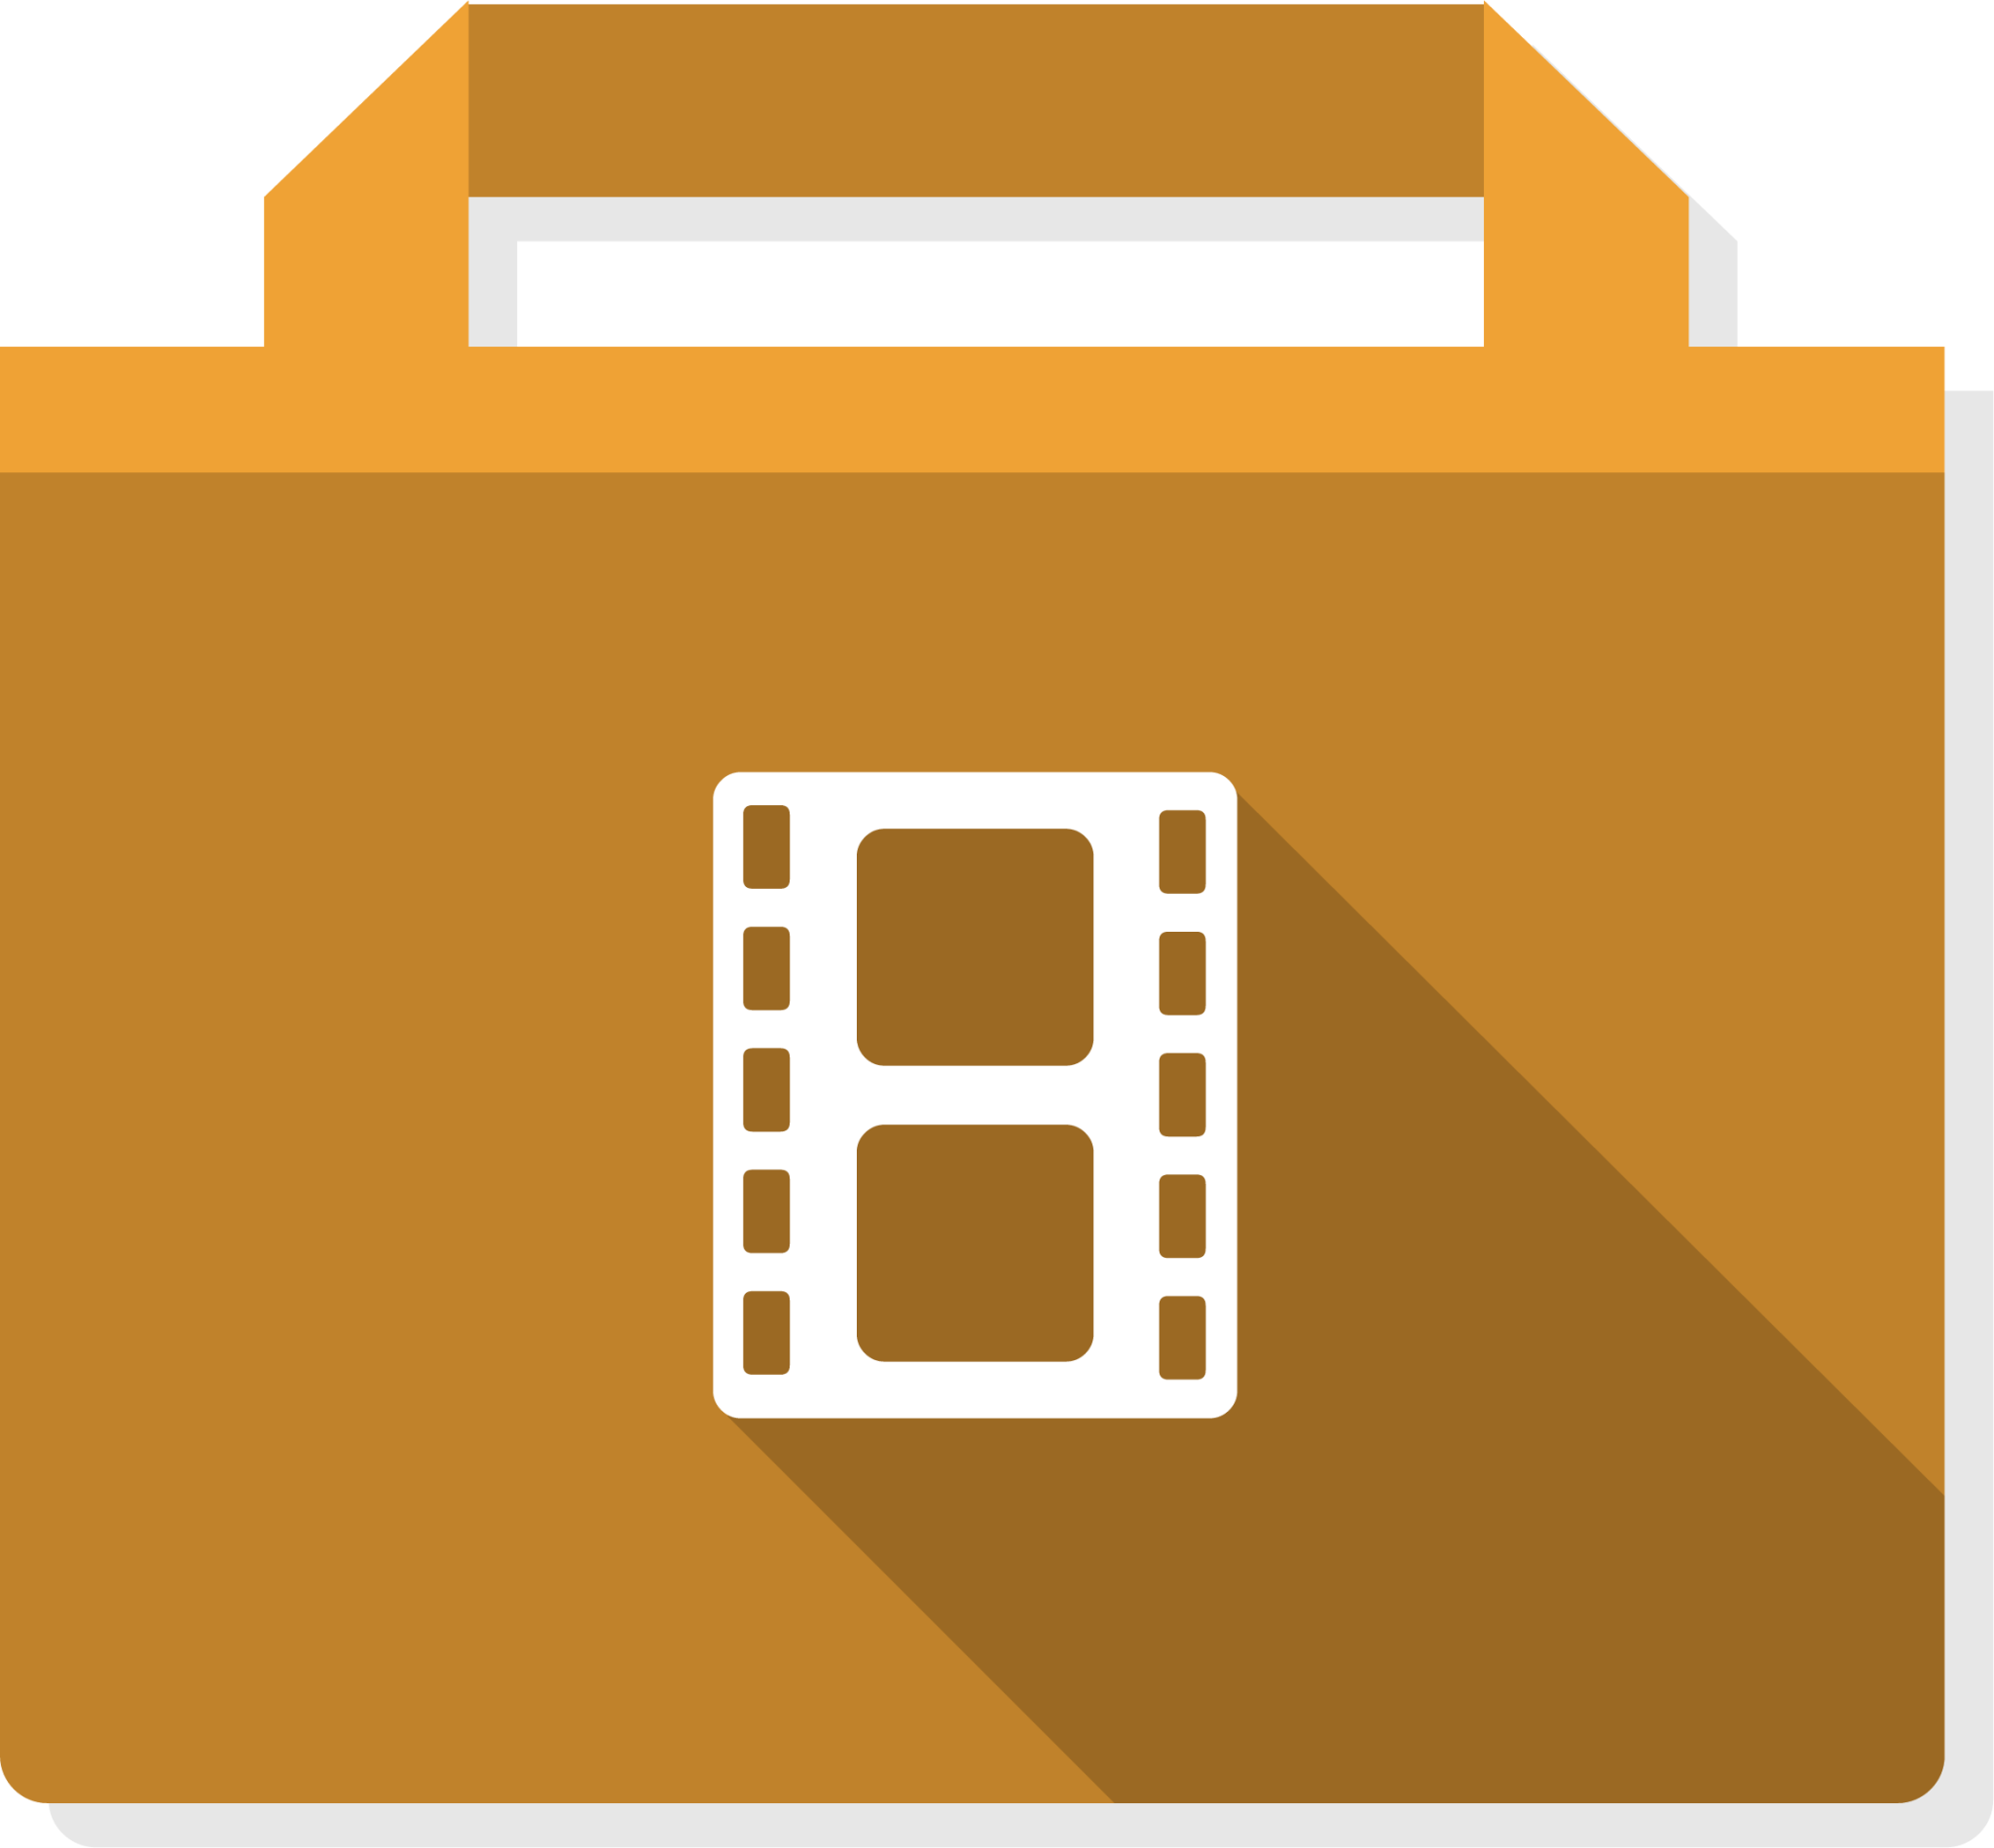 Folders User Movies icon